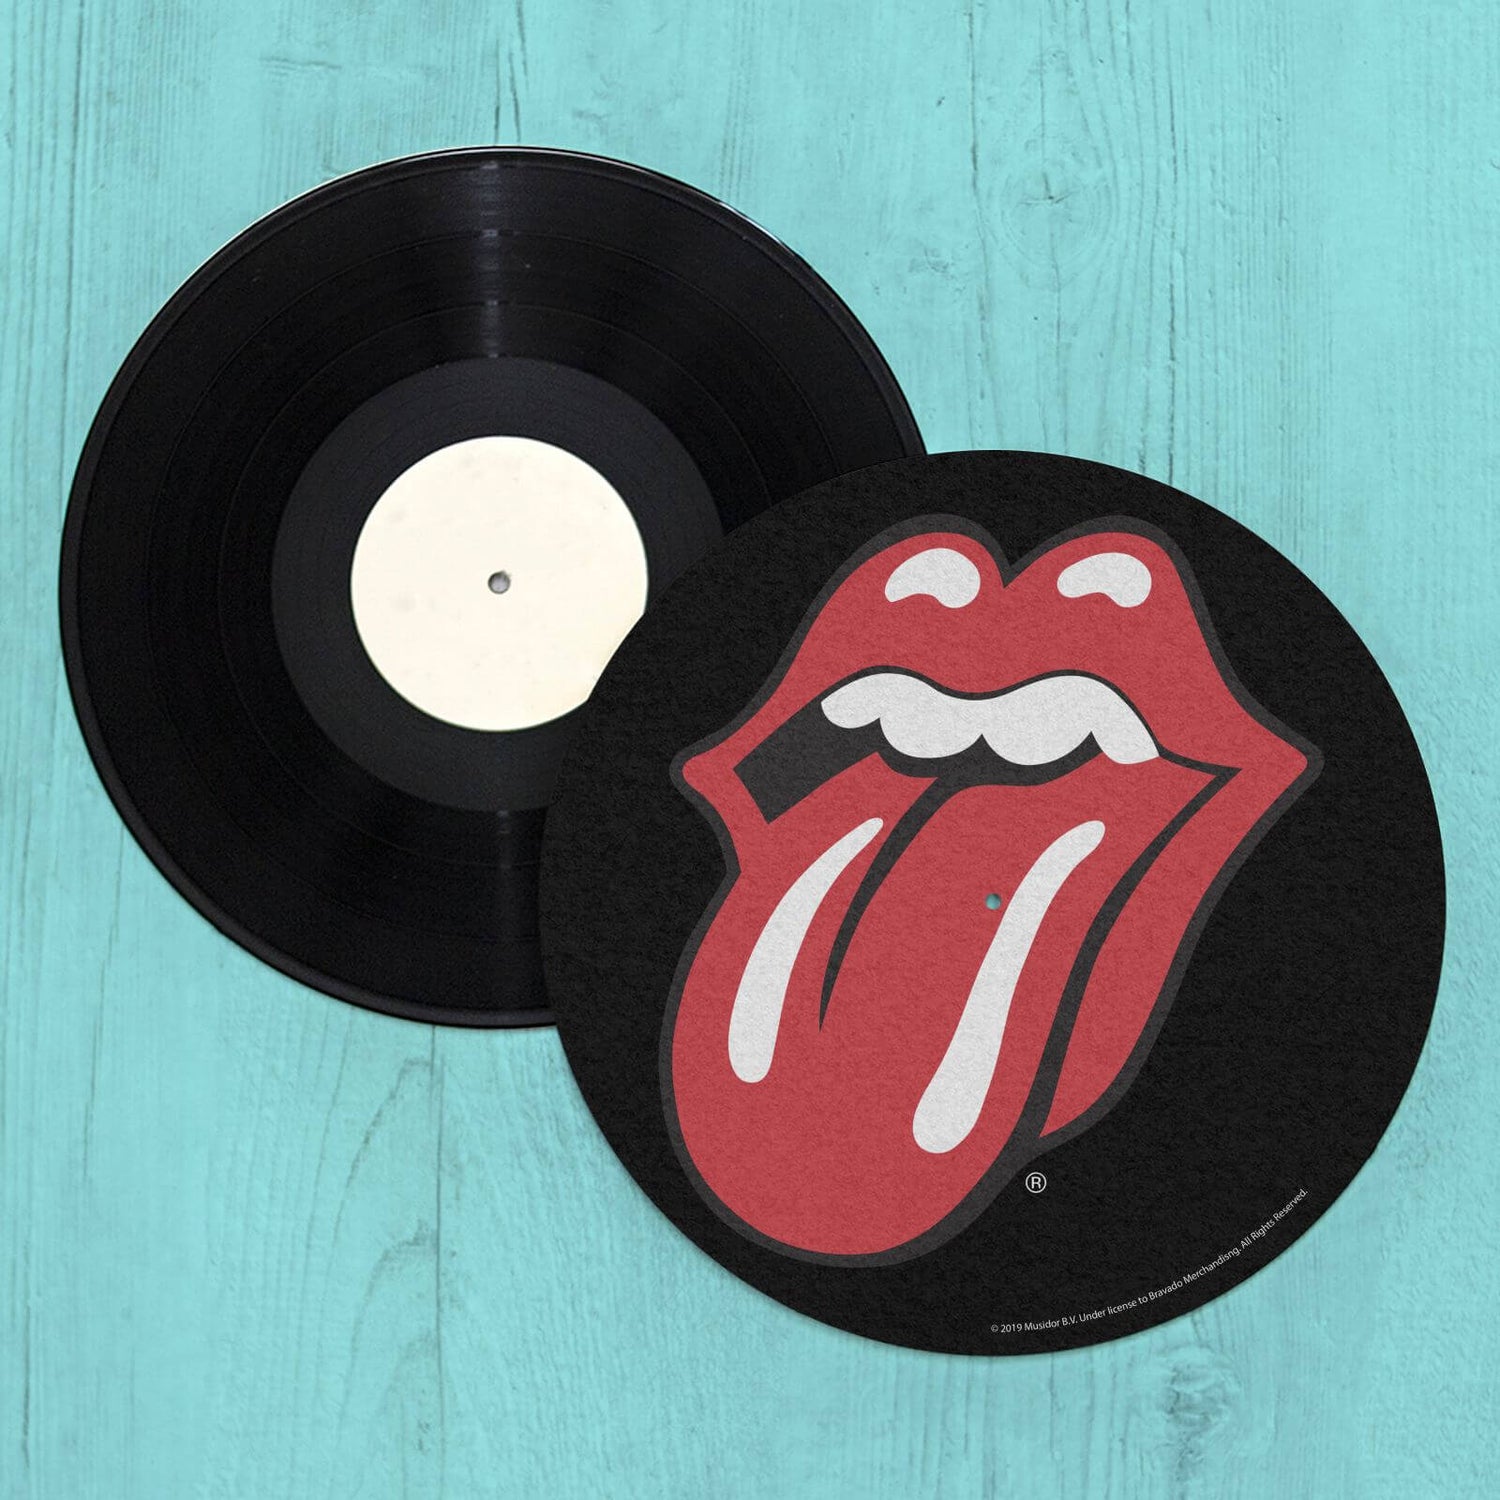 Stream The Rolling Stones - Paint It Black (ORIGINAL) by DJ Lantern